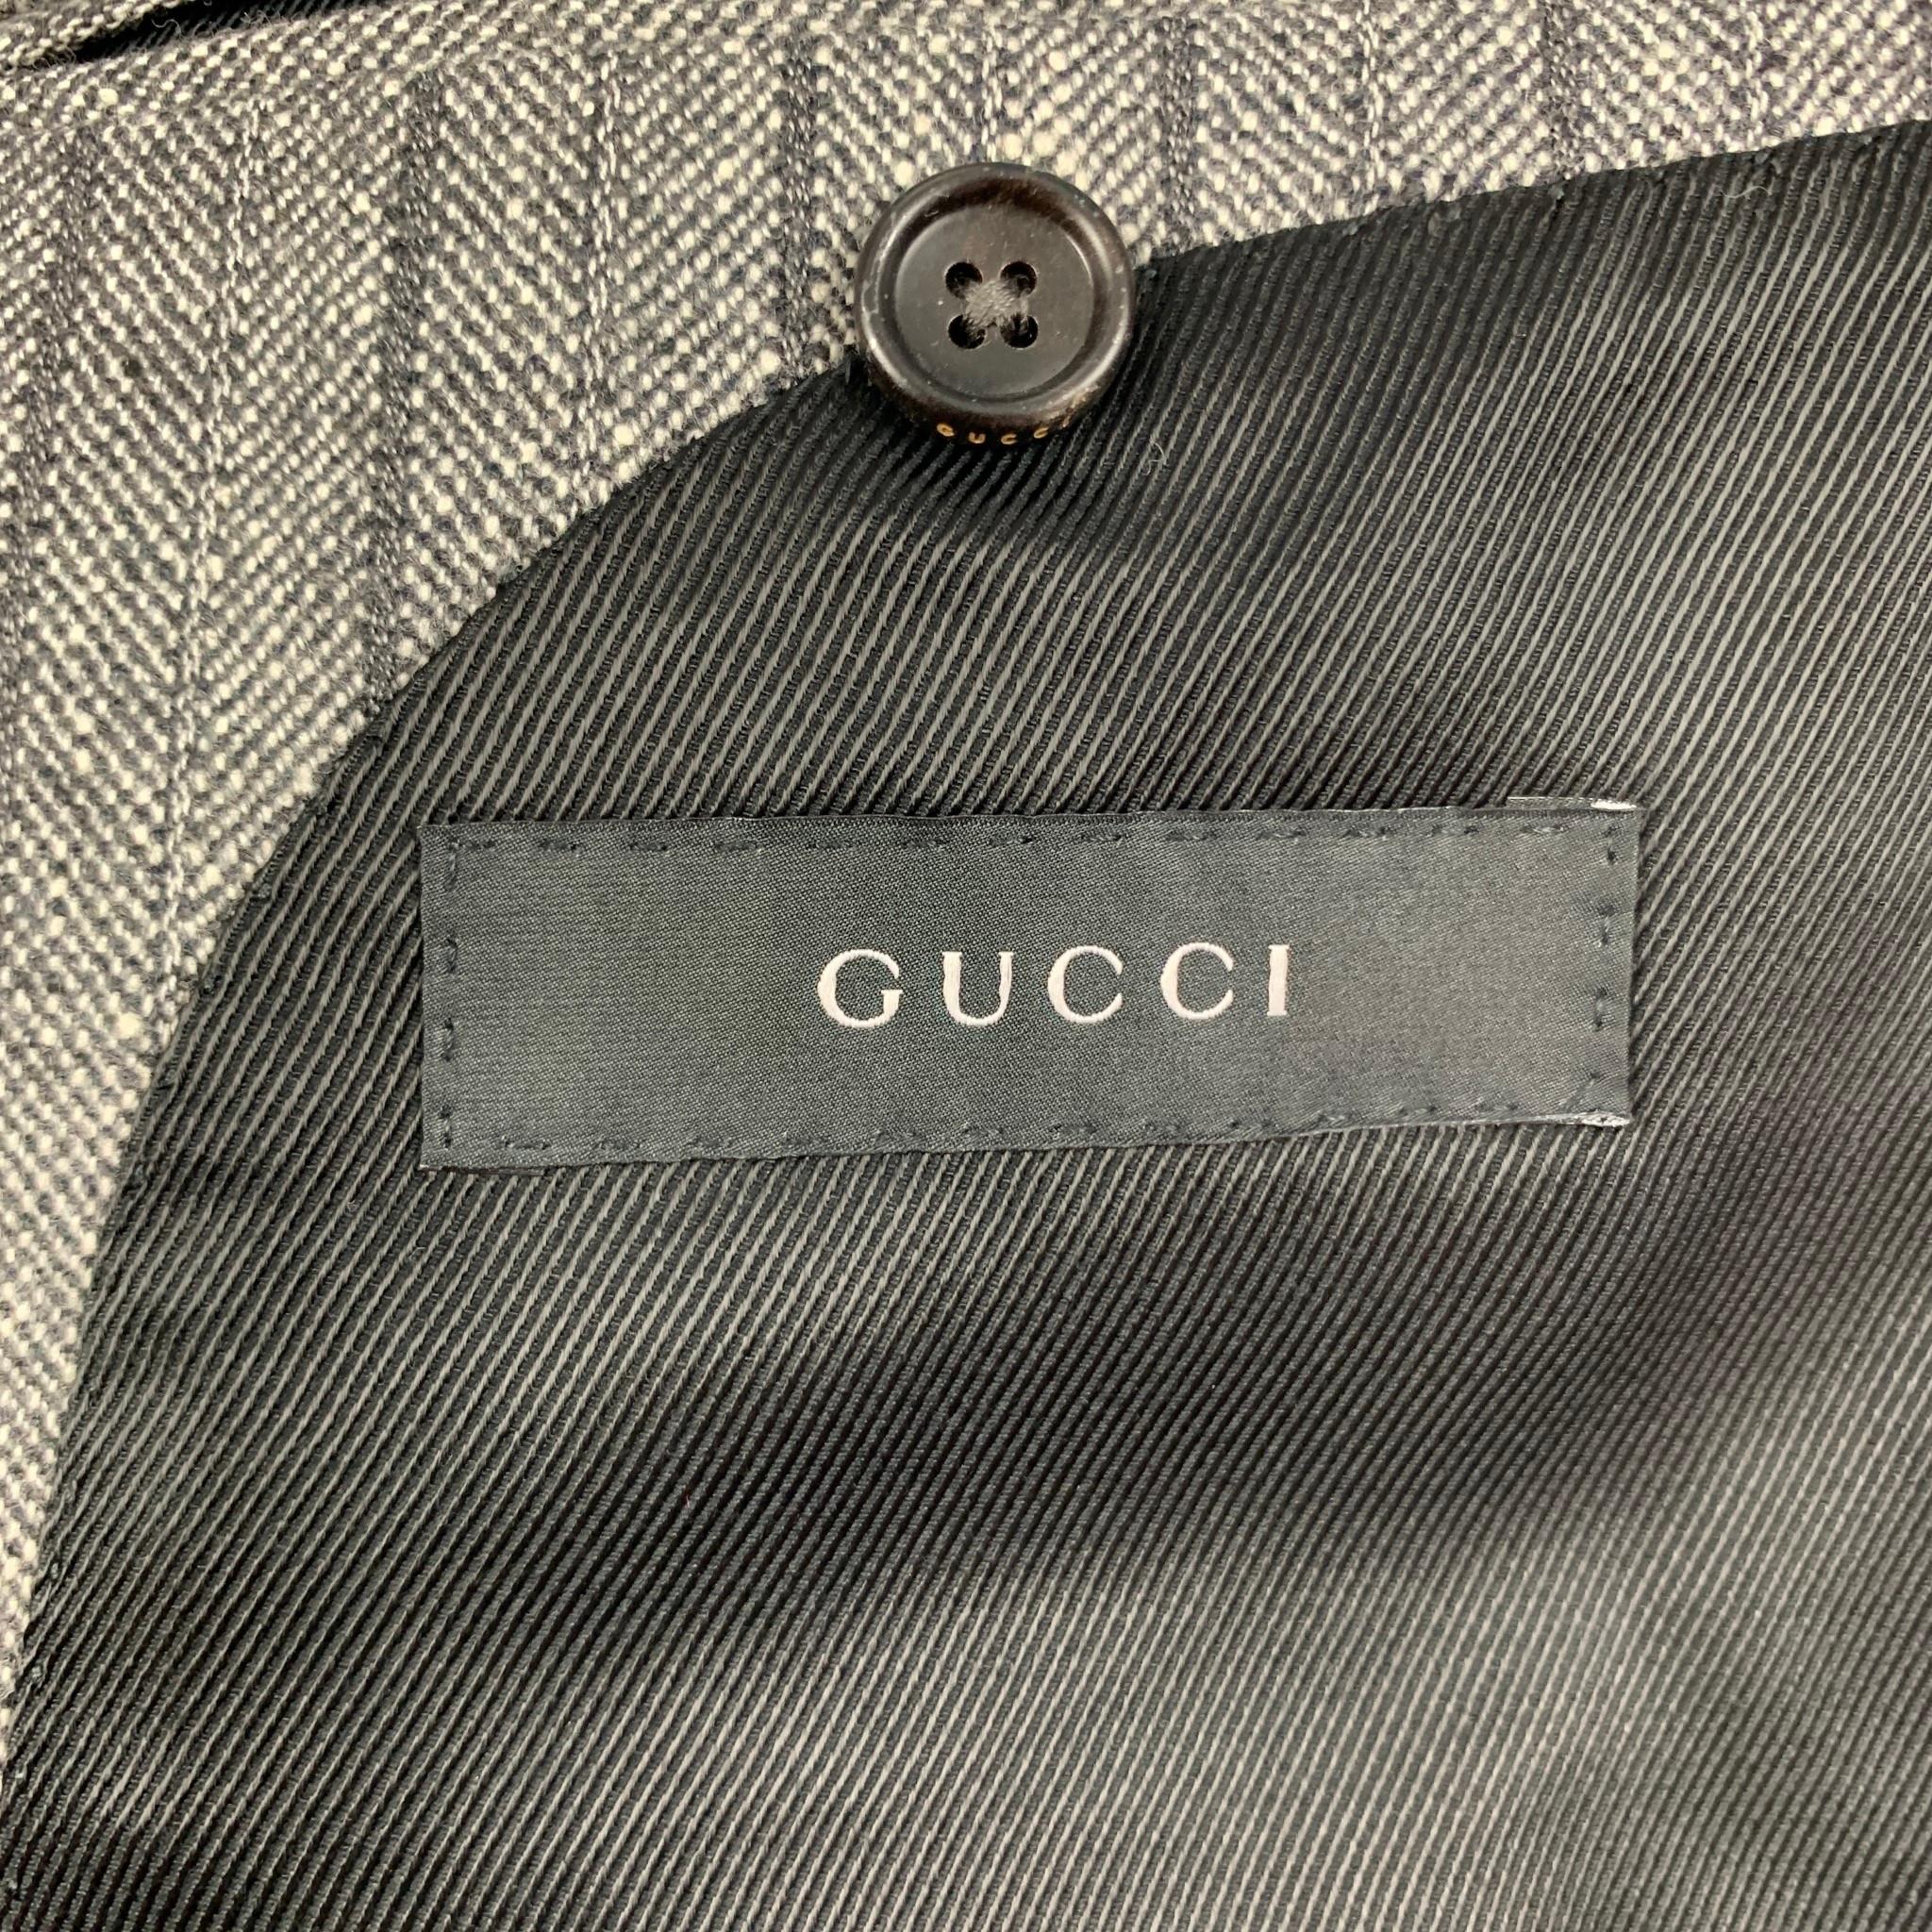 GUCCI Size 38 Grey Stripe Wool Blend Notch Lapel Suit 3